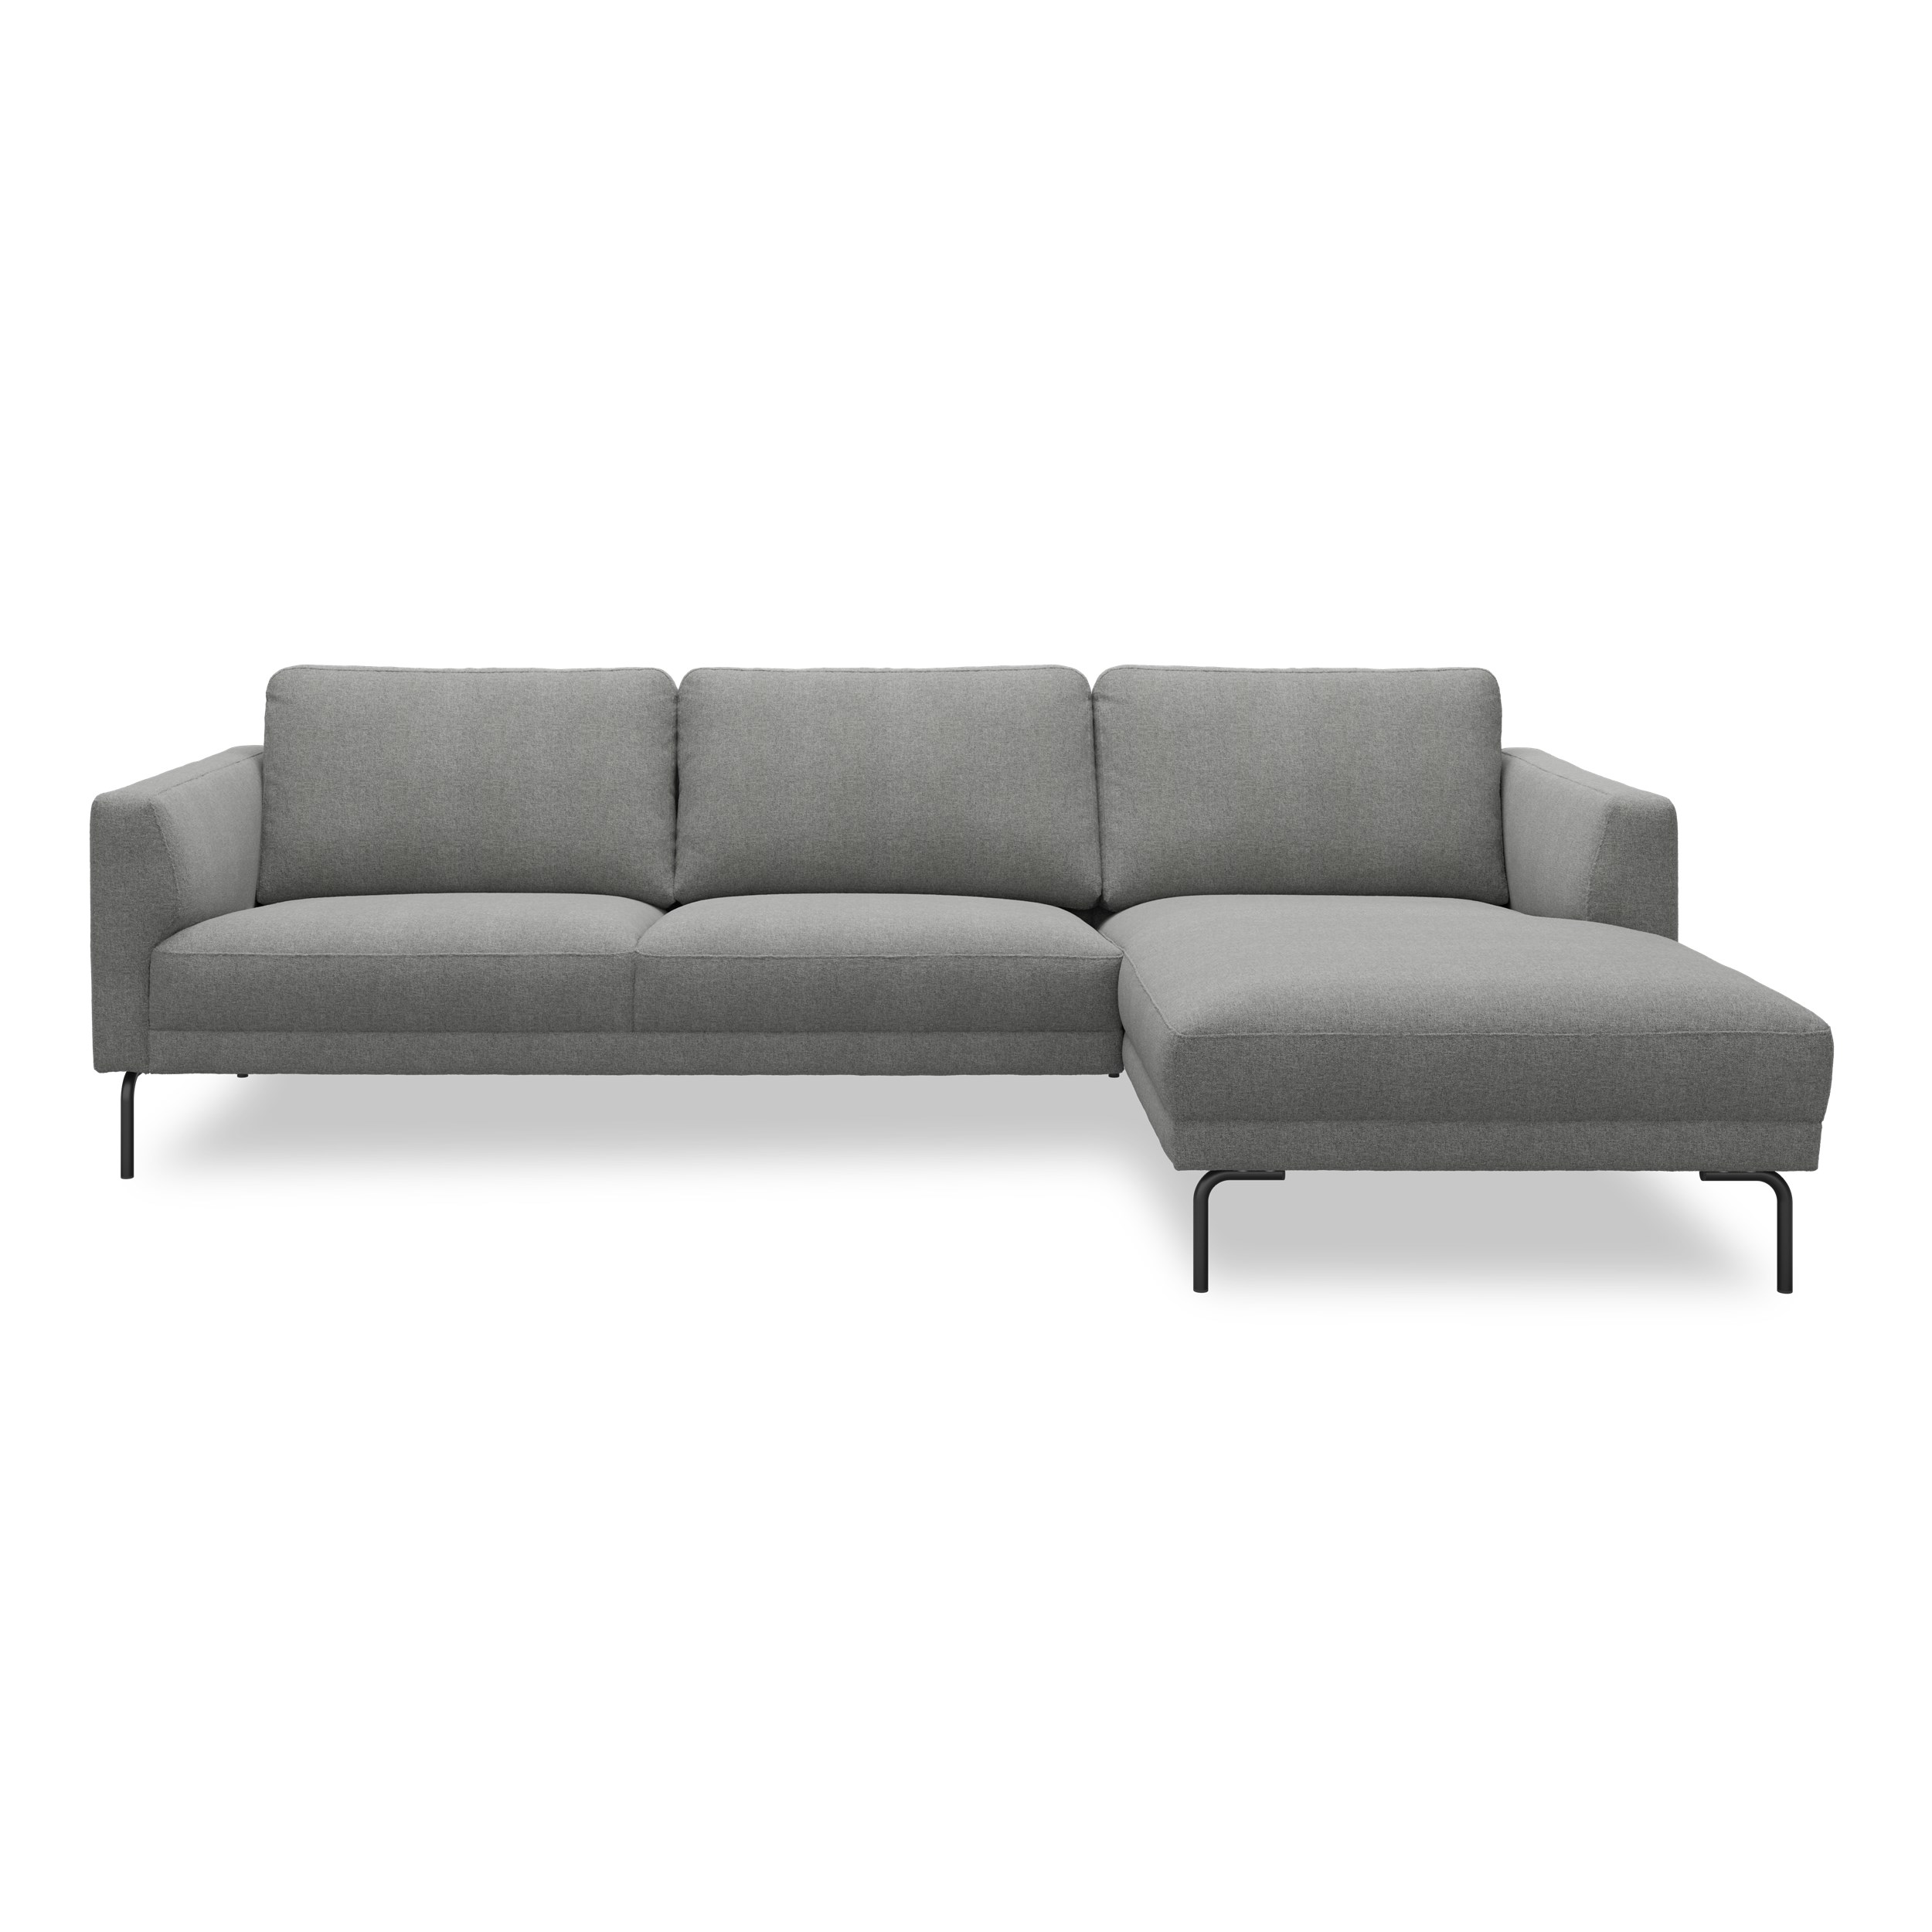 Springfield Sofa med chaiselong - Soil 167 Zinc stof og ben i sort metal